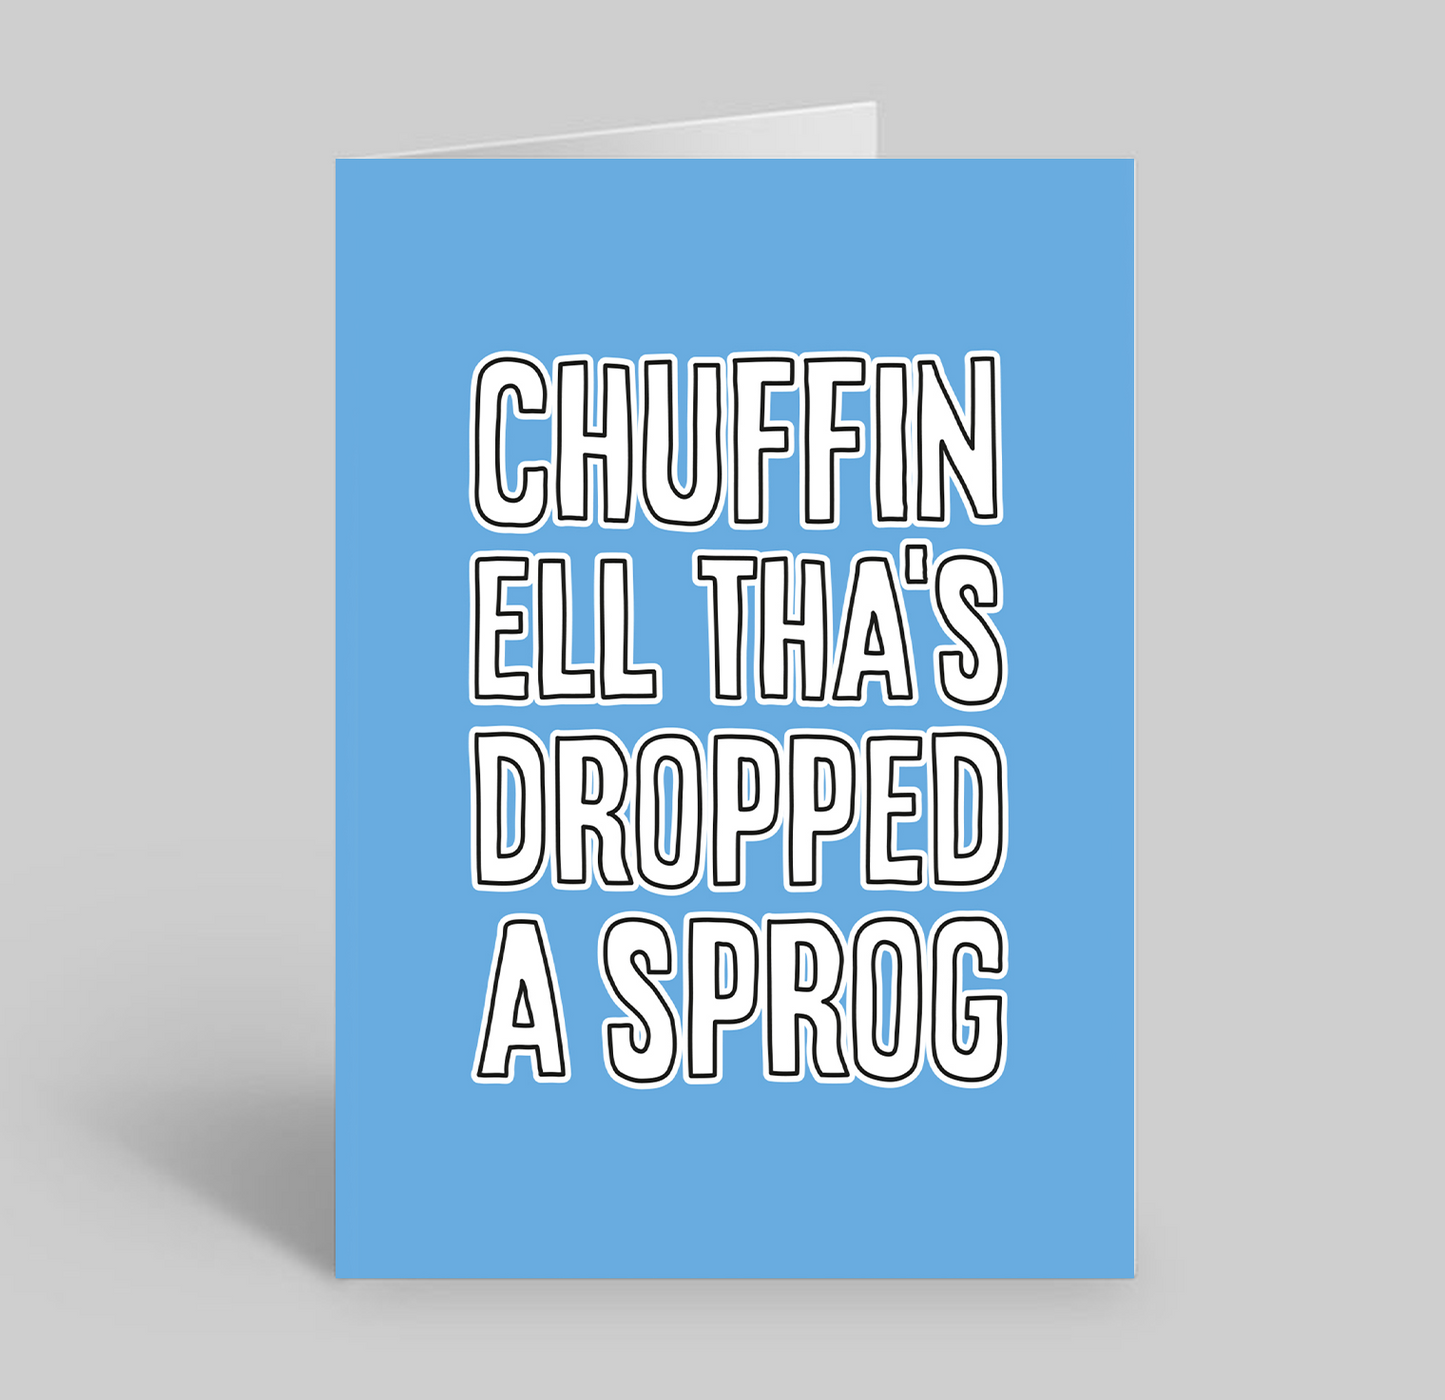 Chuffin Ell Tha's Dropped A Sprog!